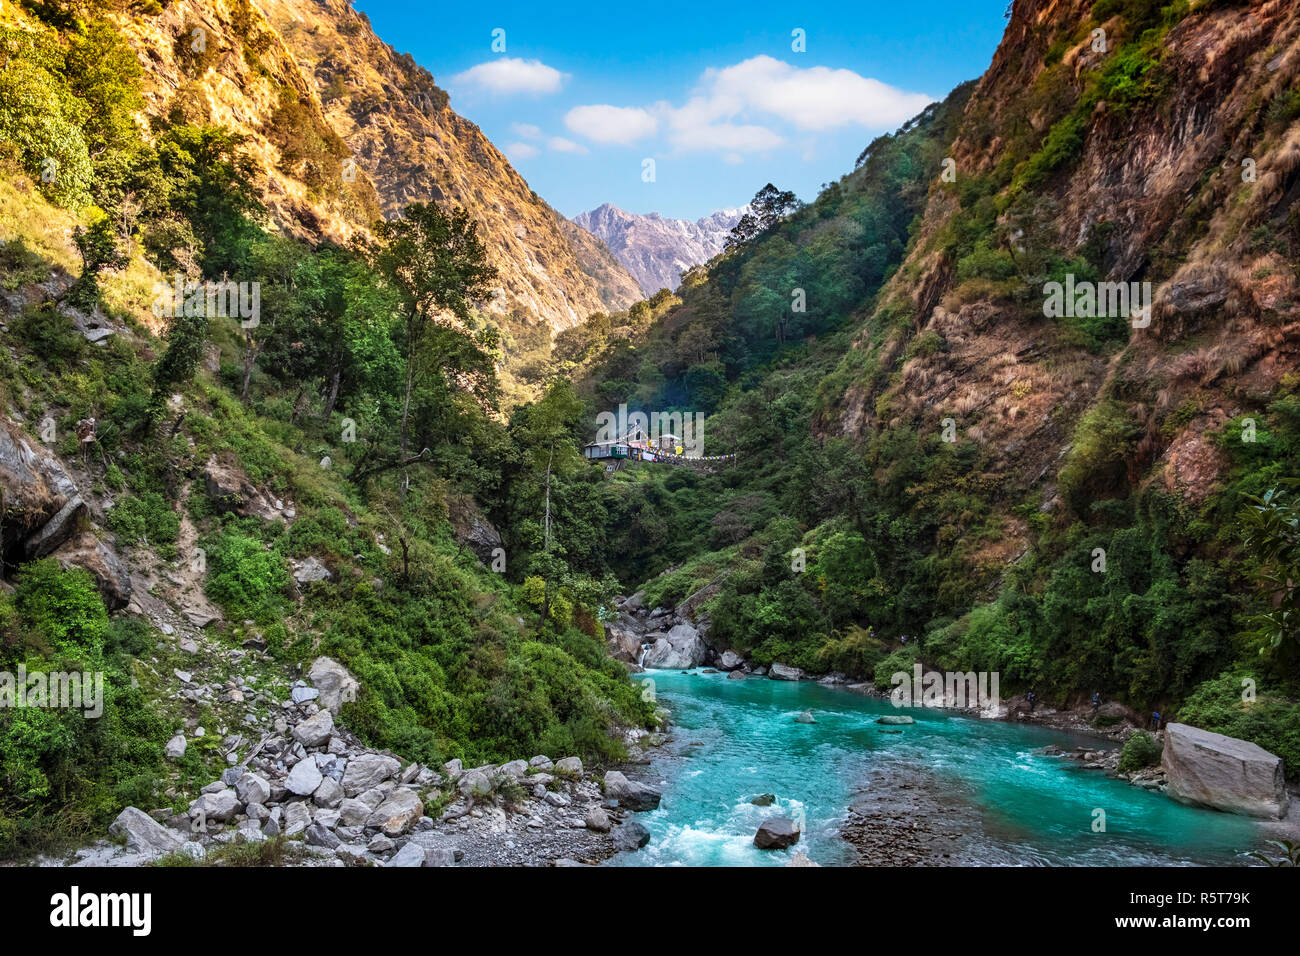 Langtang fiume in Nepal con insediamenti umani in background Foto Stock